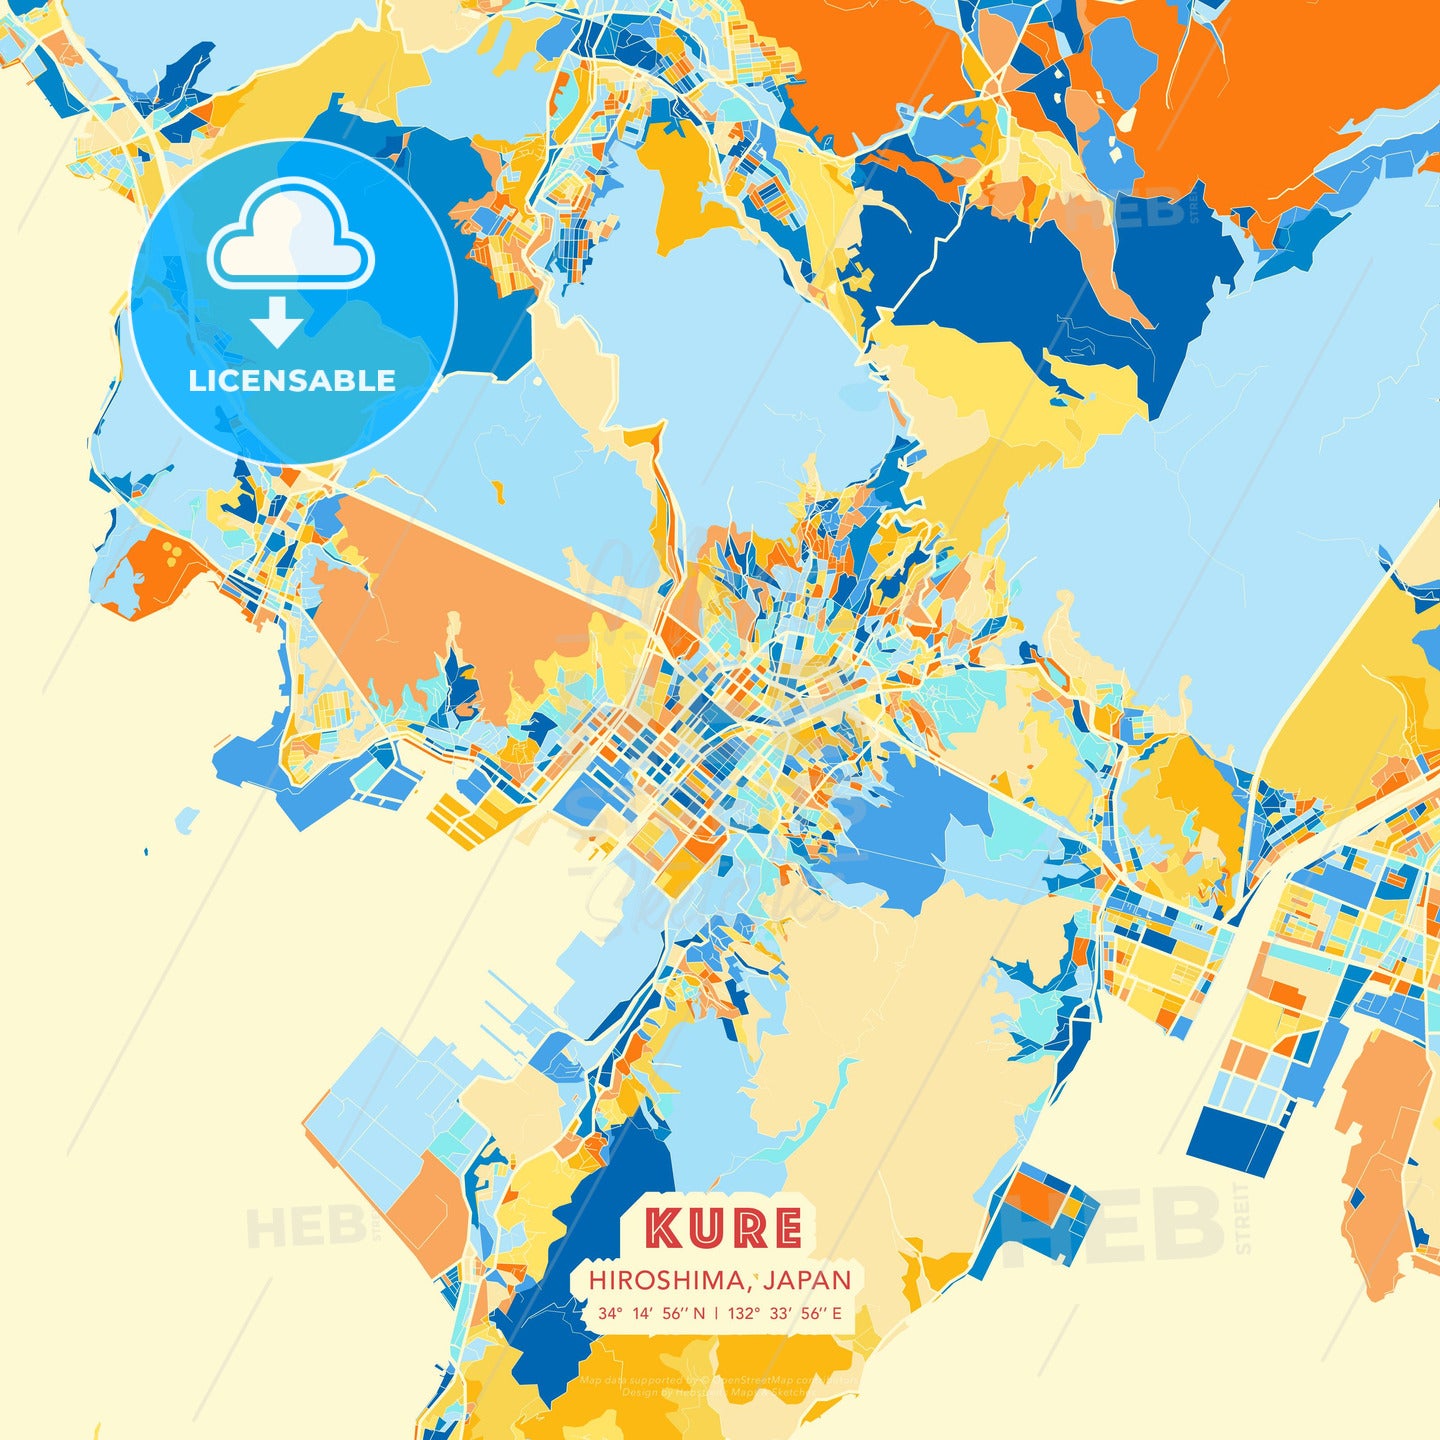 Kure, Hiroshima, Japan, map - HEBSTREITS Sketches